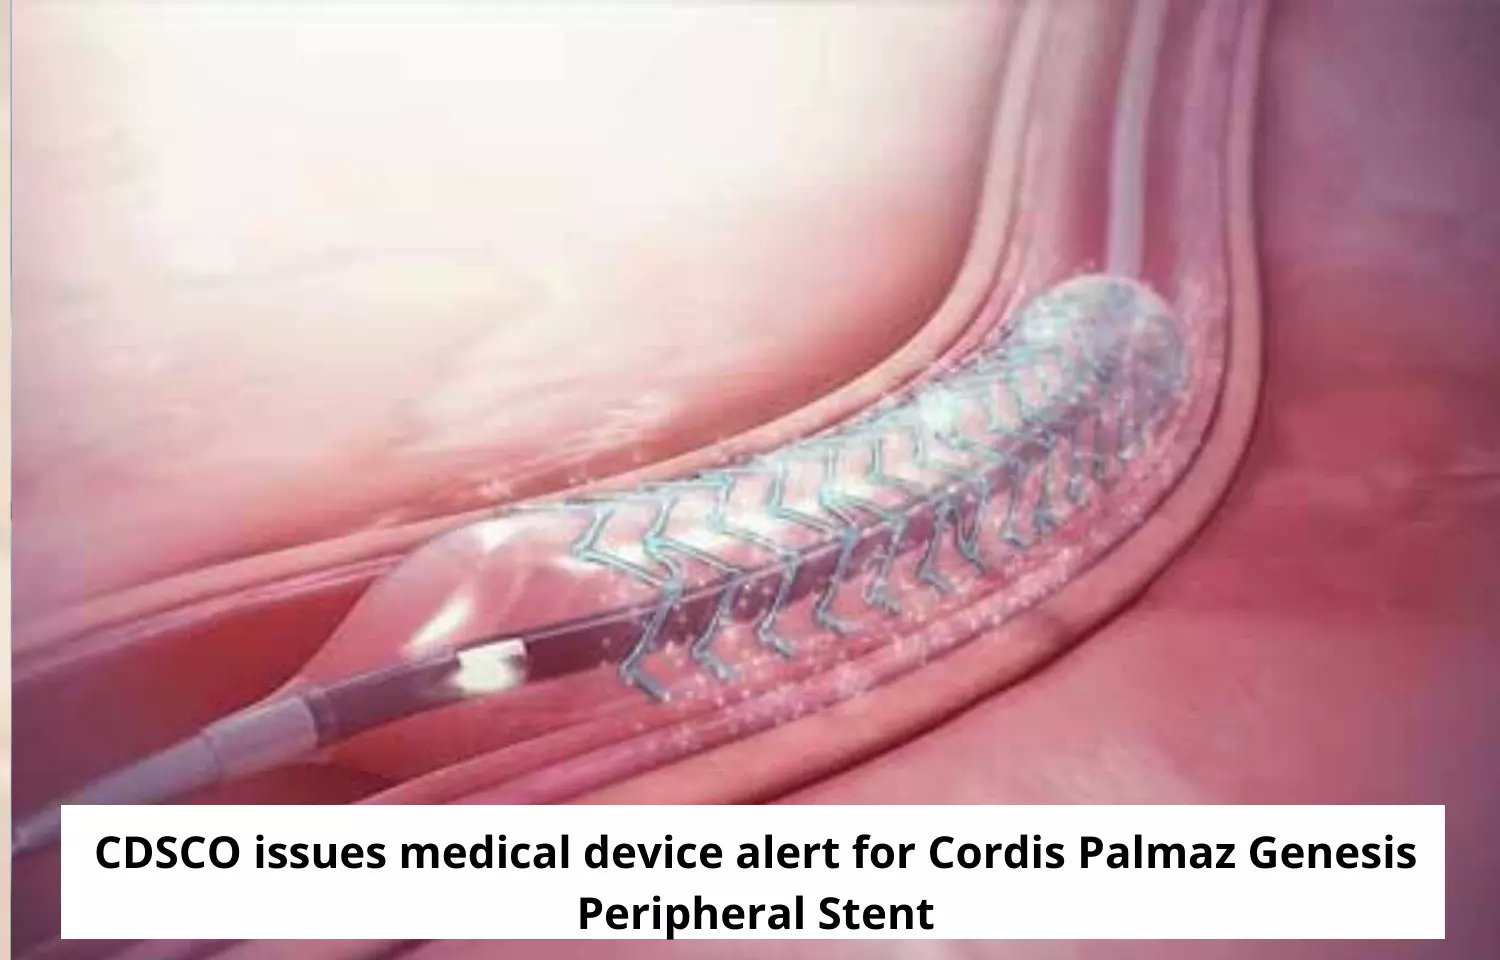 CDSCO issues medical device alert for Cordis Palmaz Genesis Peripheral Stent